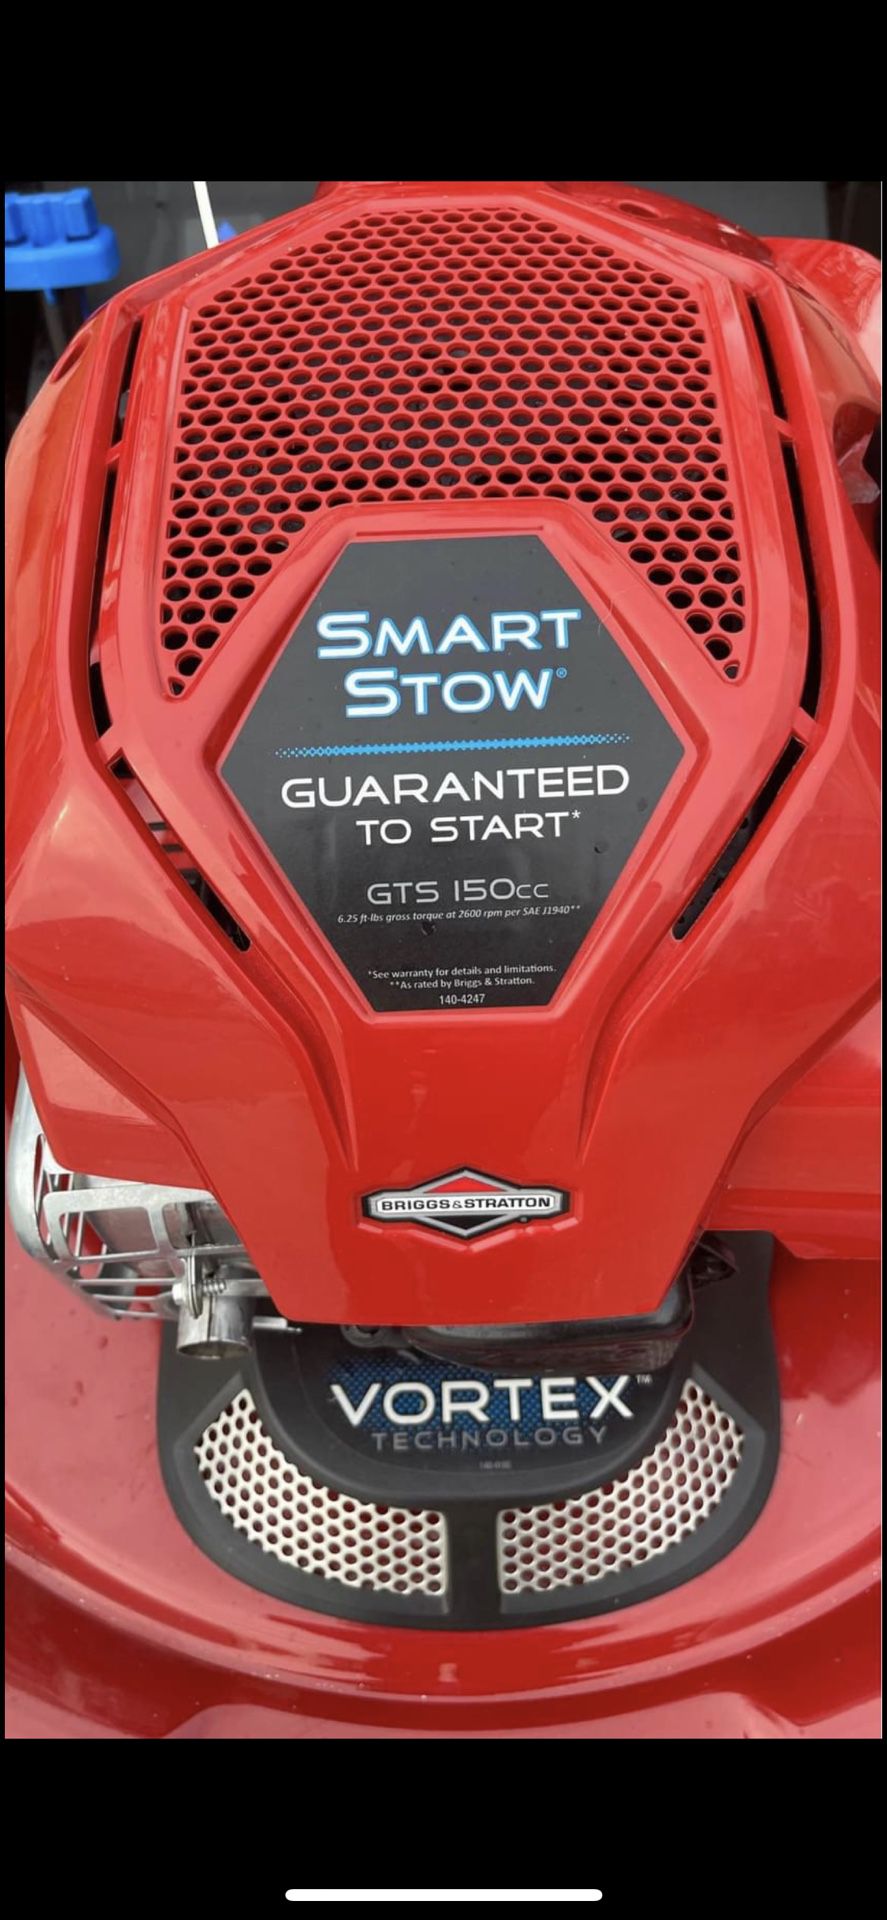 Toro Smart Stow  Vortex Technologu Gts150cc